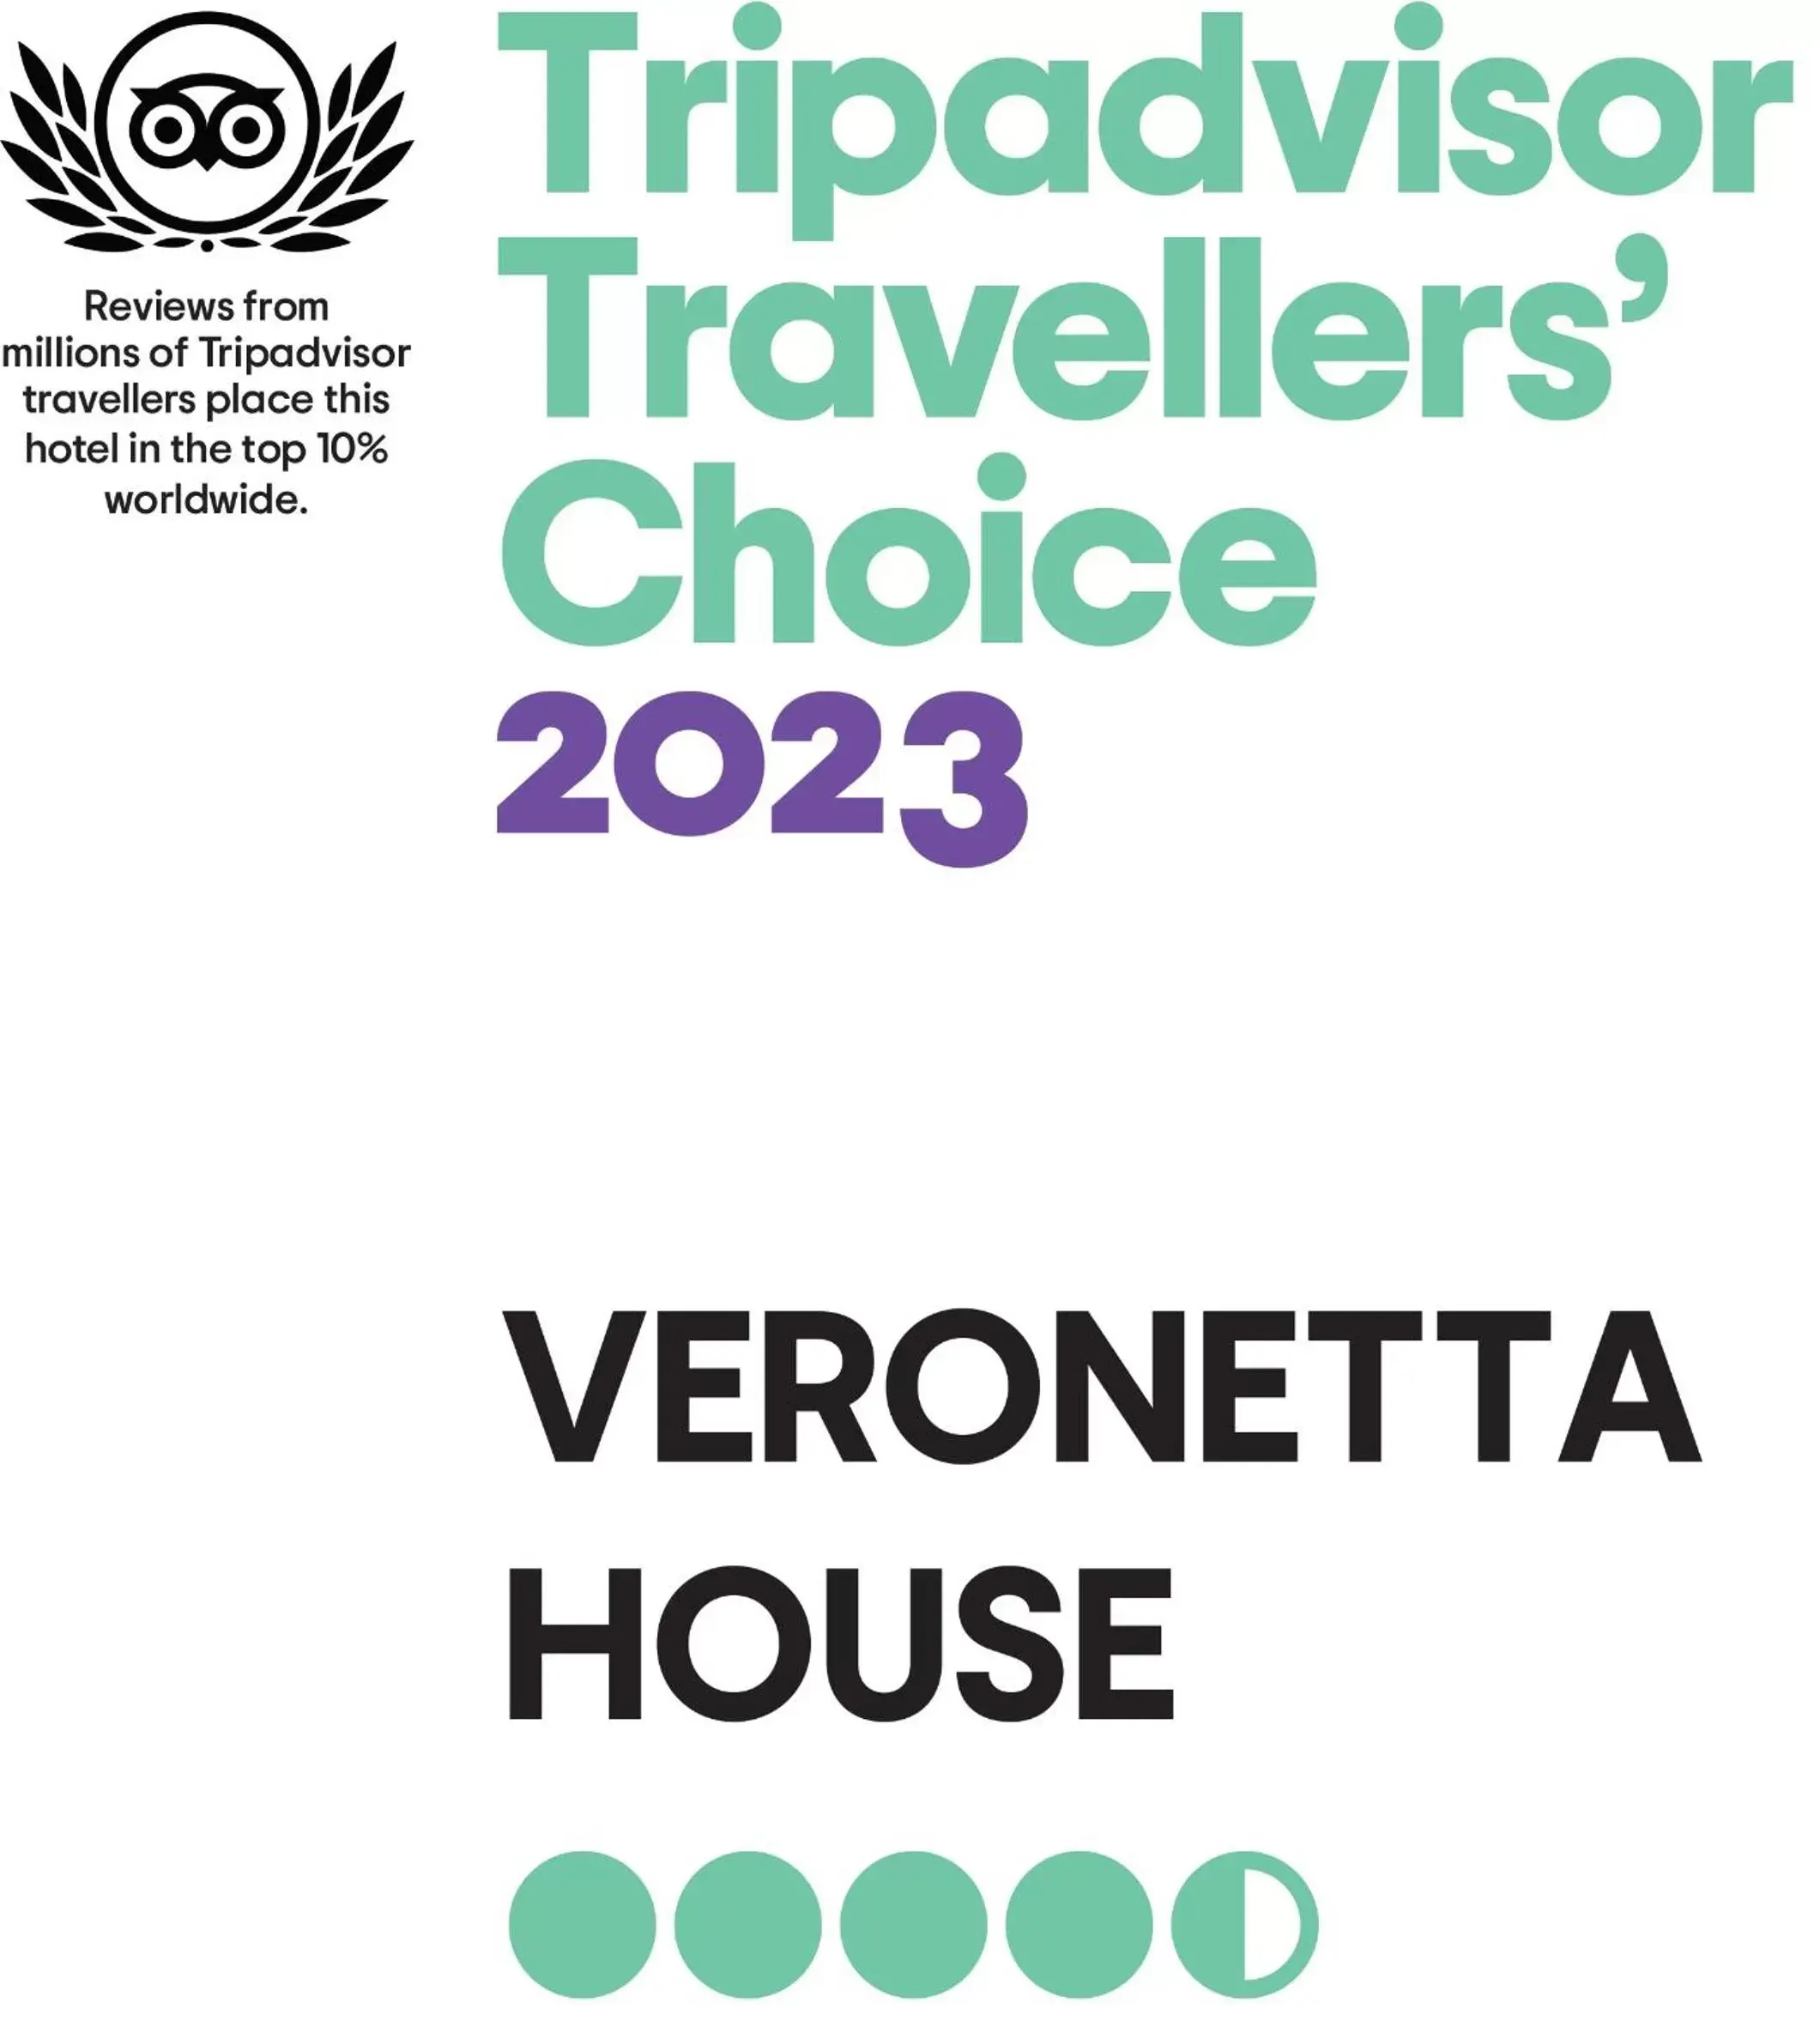 Certificate/Award in Veronetta House